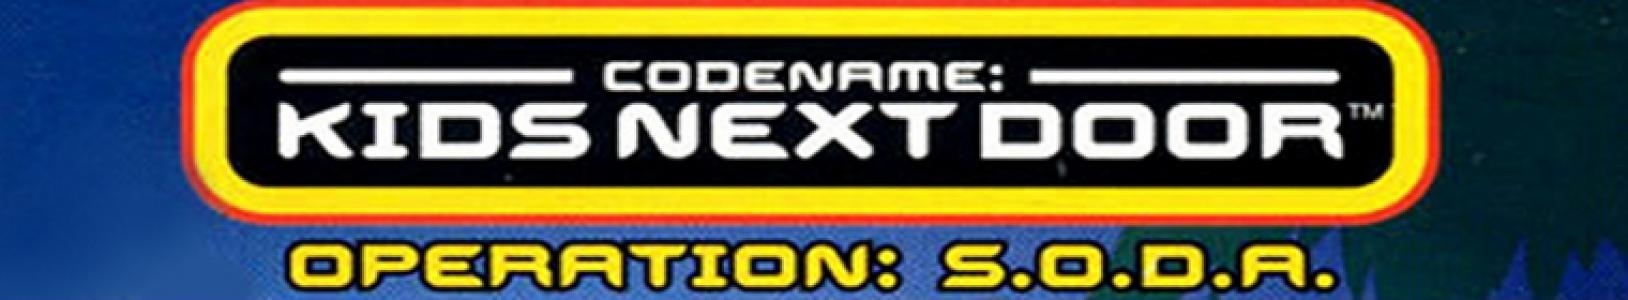 Codename: Kids Next Door - Operation S.O.D.A. banner